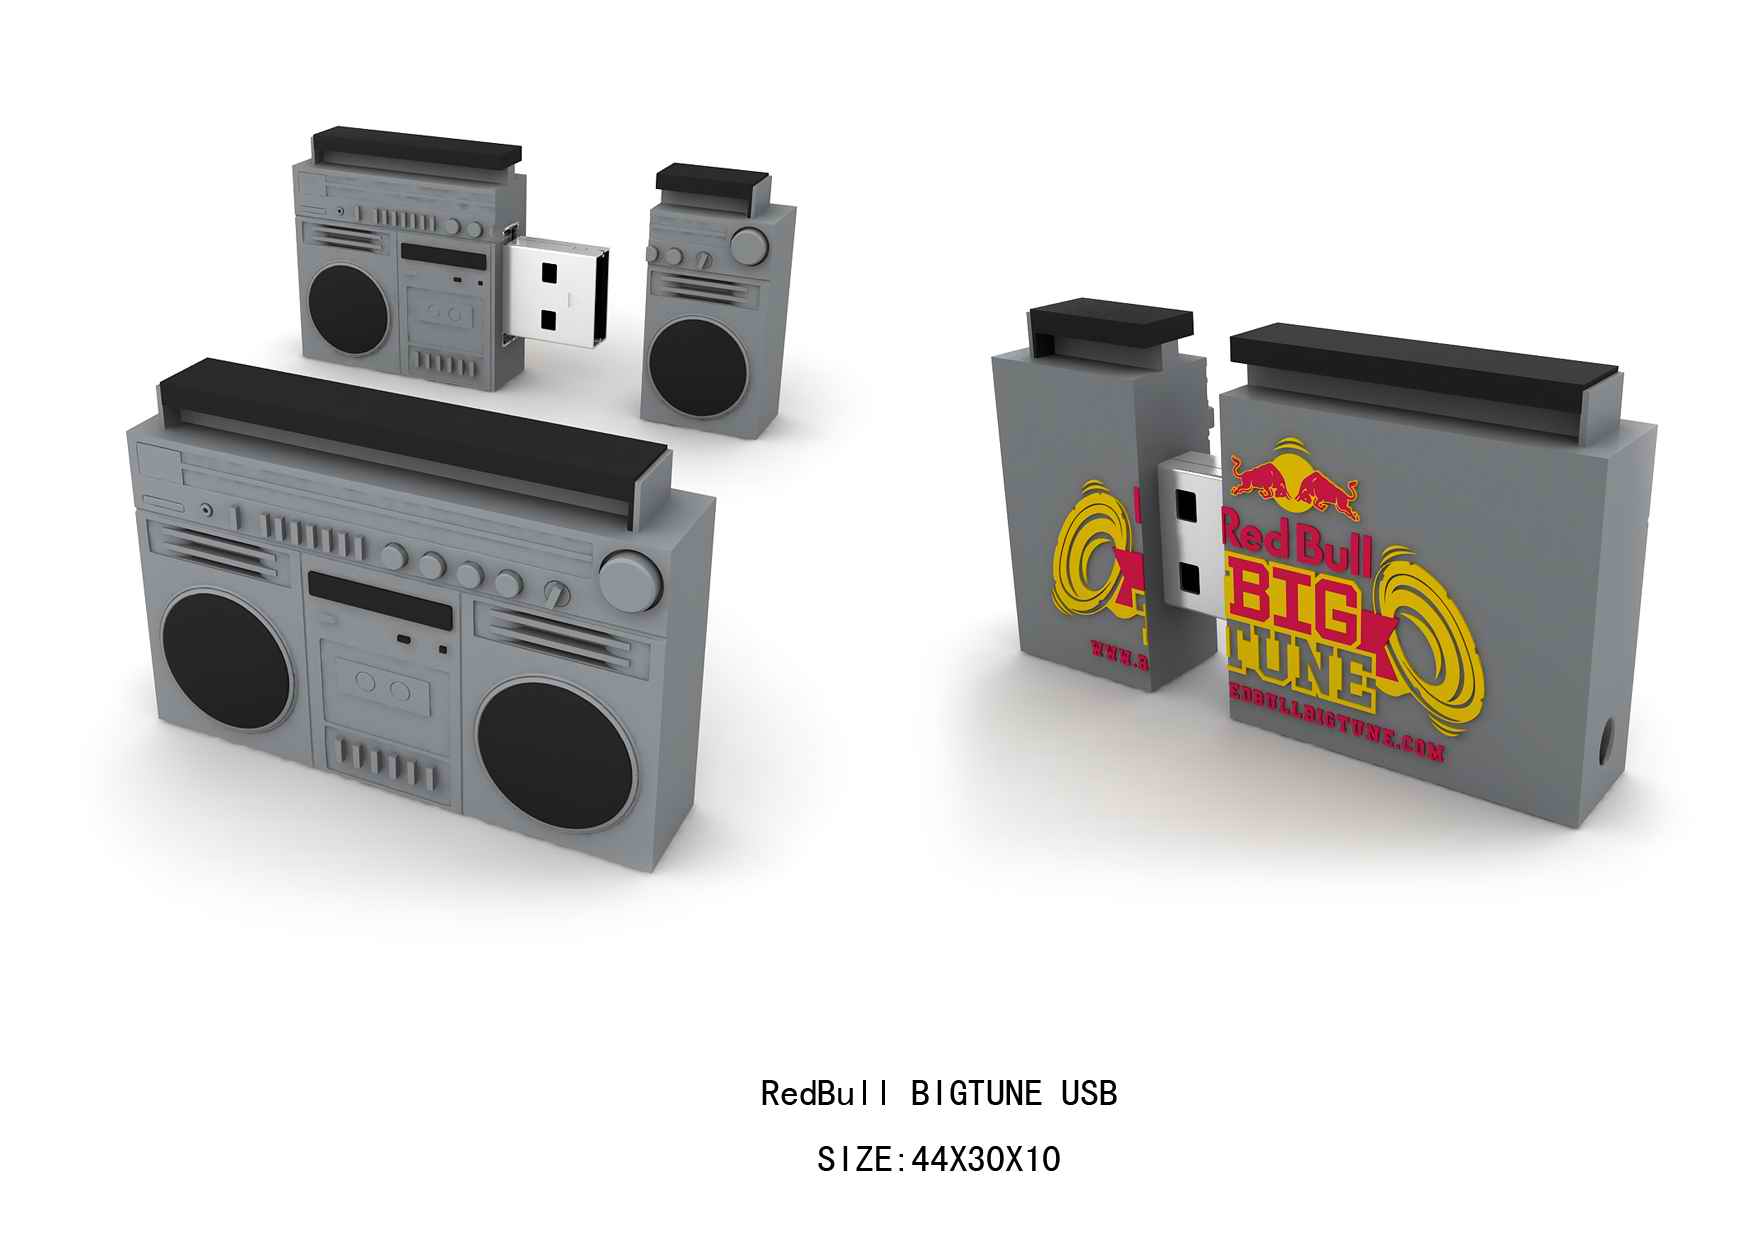 USB Flash Drive-Style RedBull Bigtune